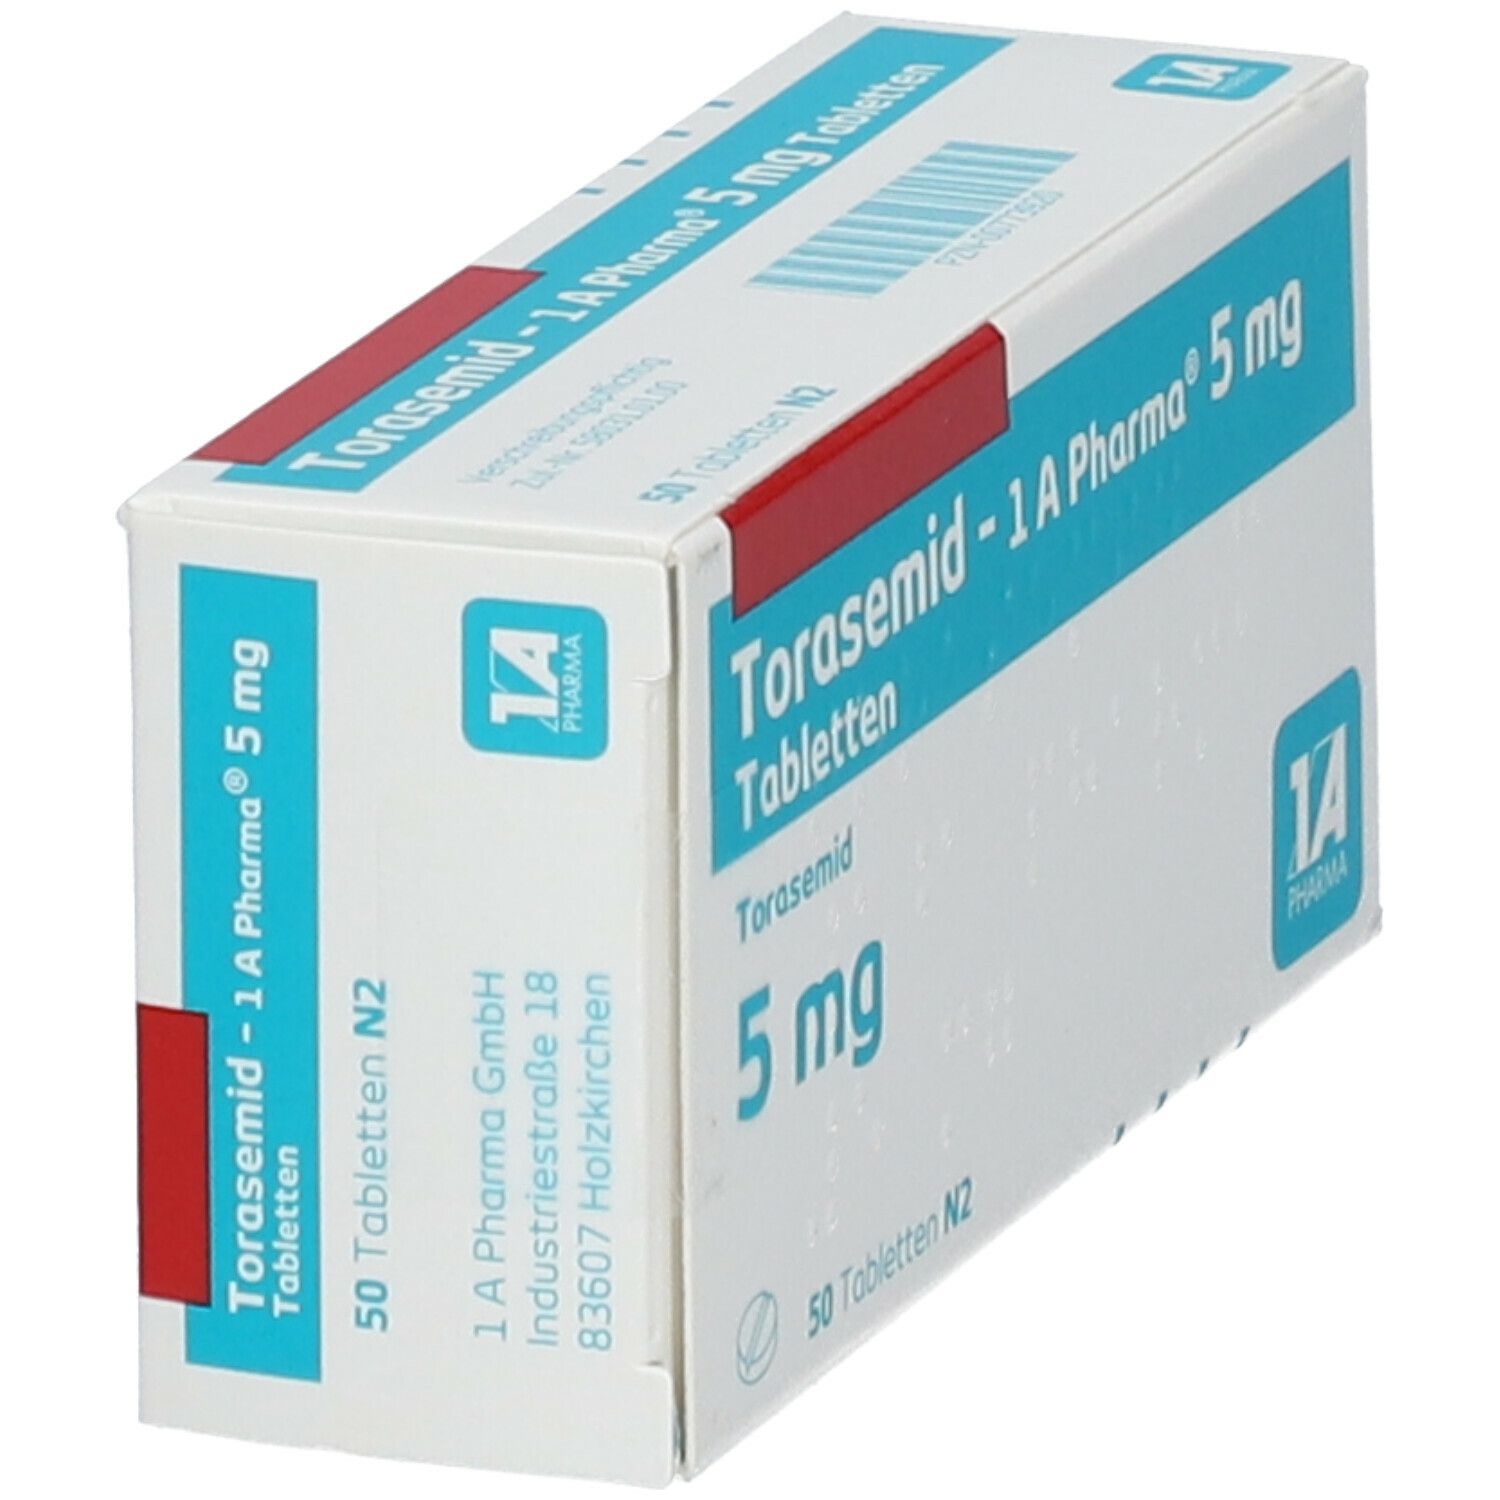 Torasemid 1A Pharma® 5 Mg